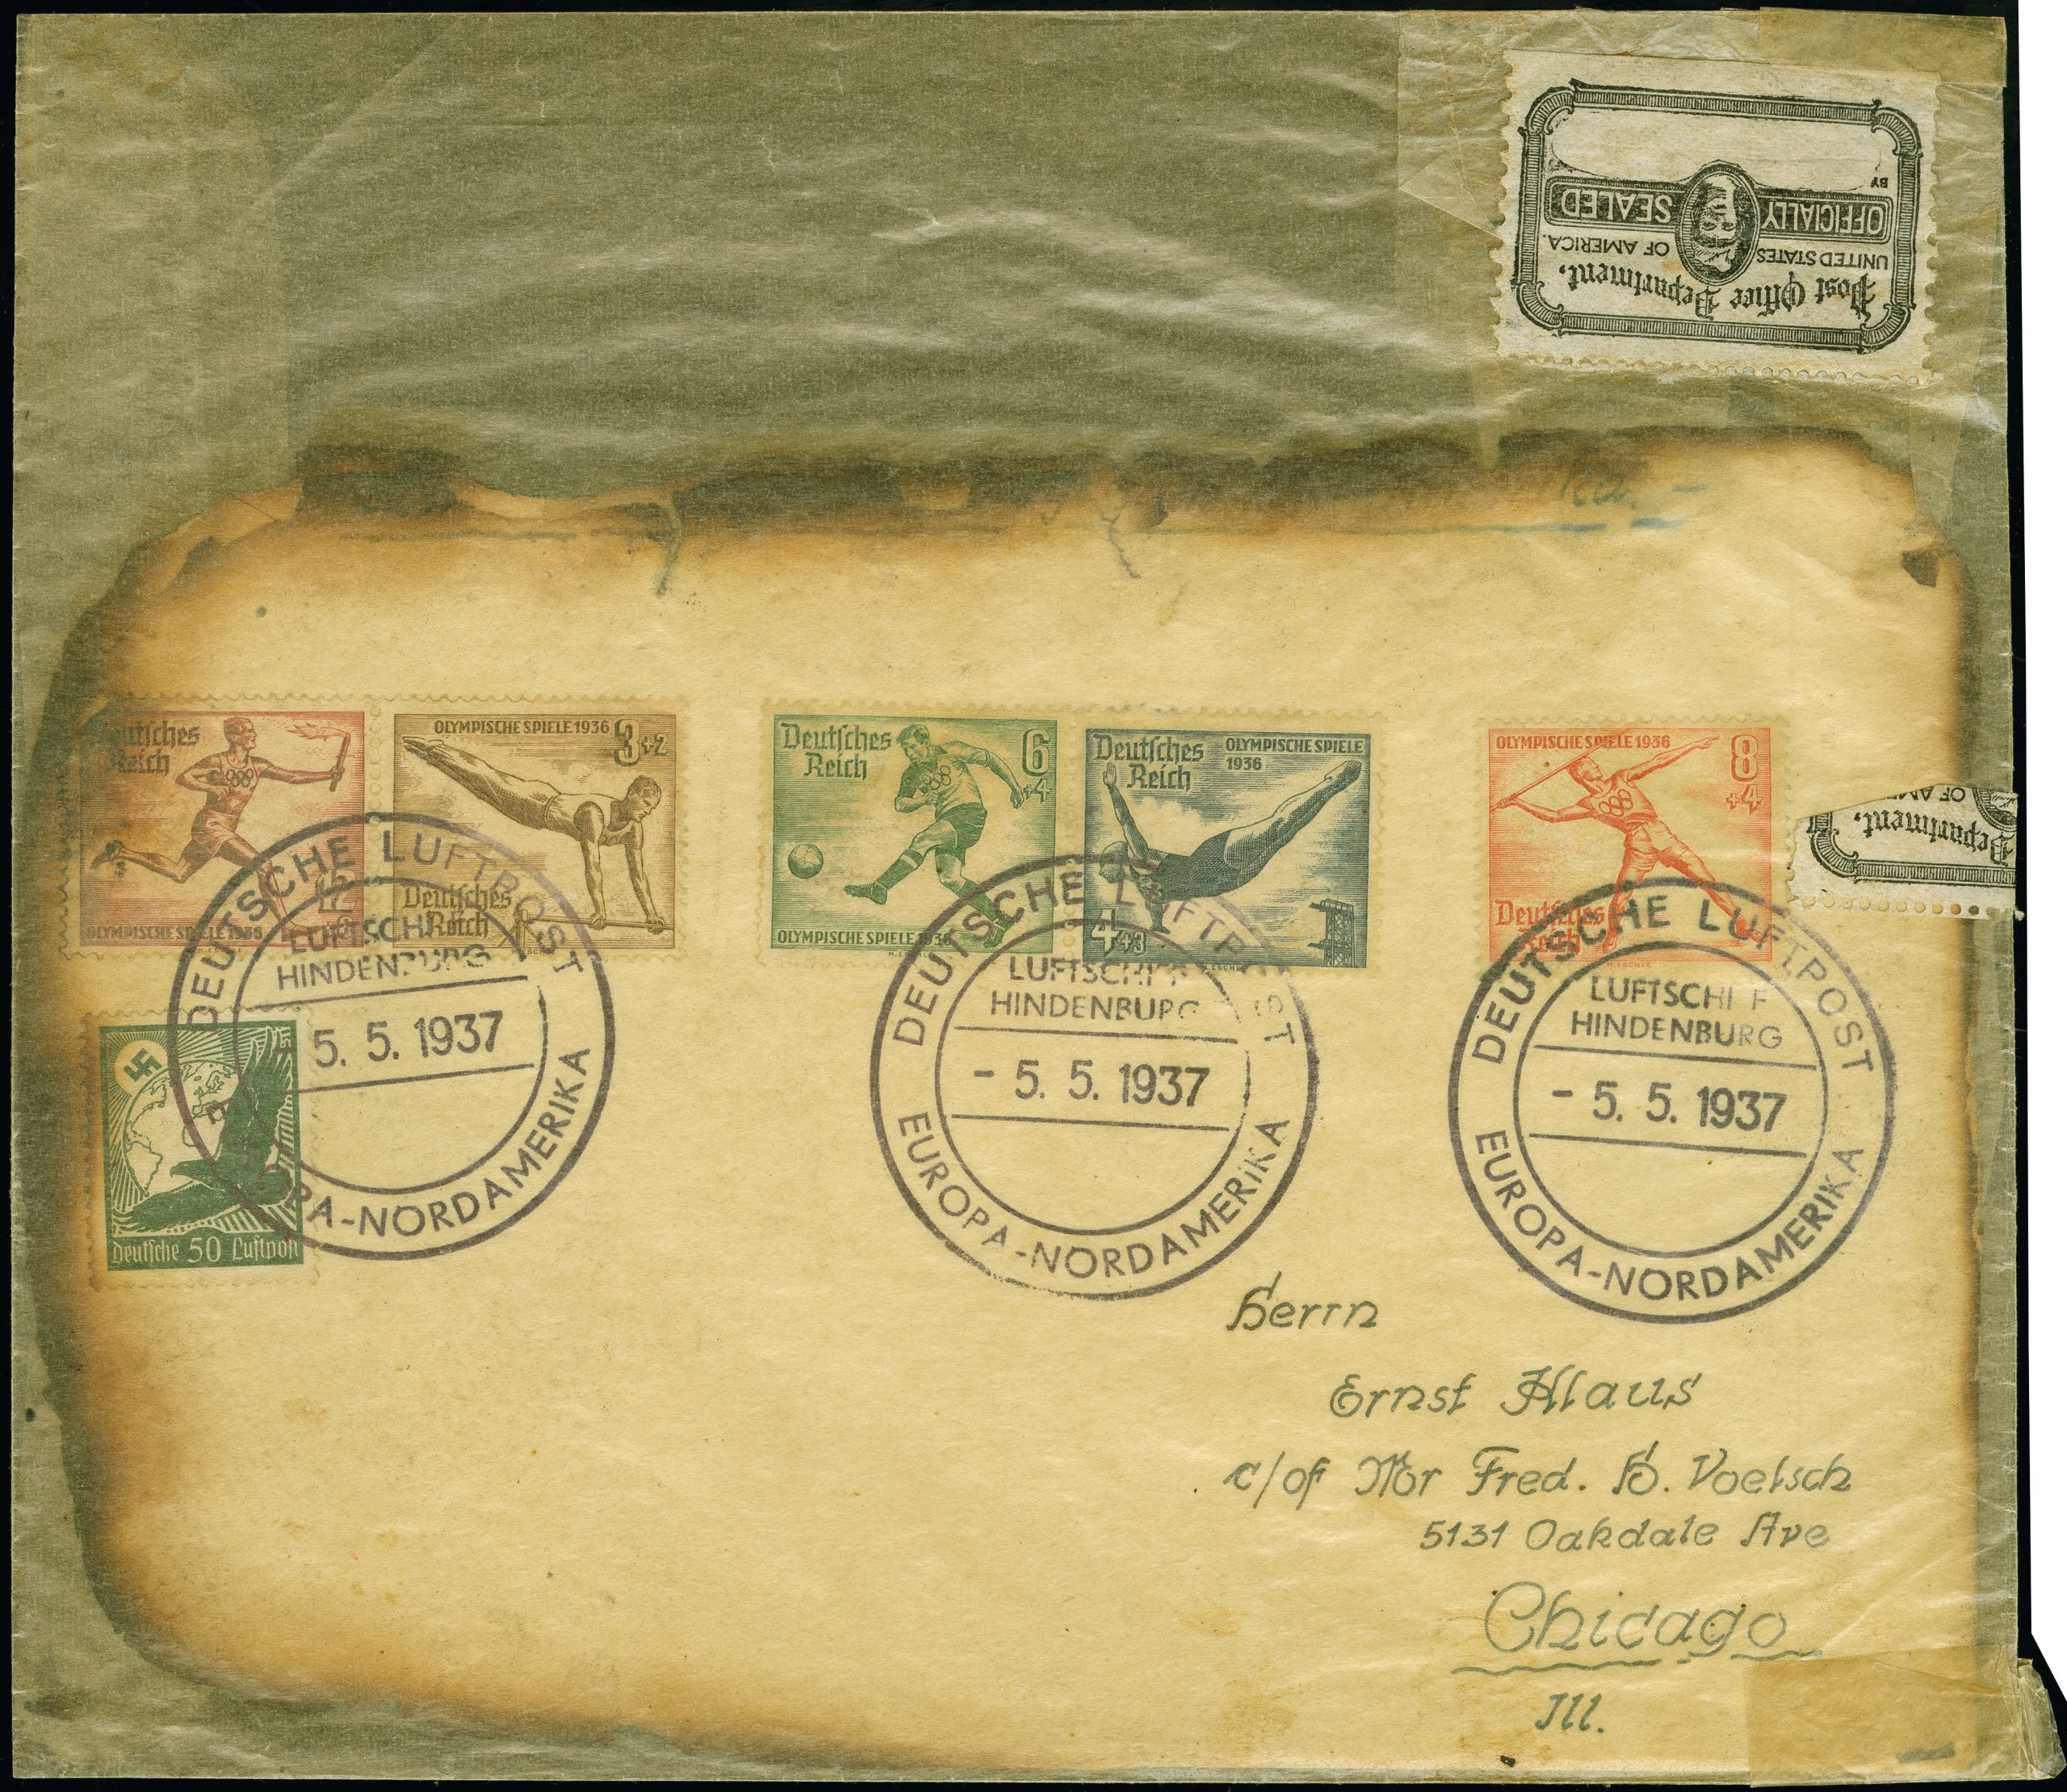 Storia postale: i viaggi dello Zeppelin in asta da Köhler